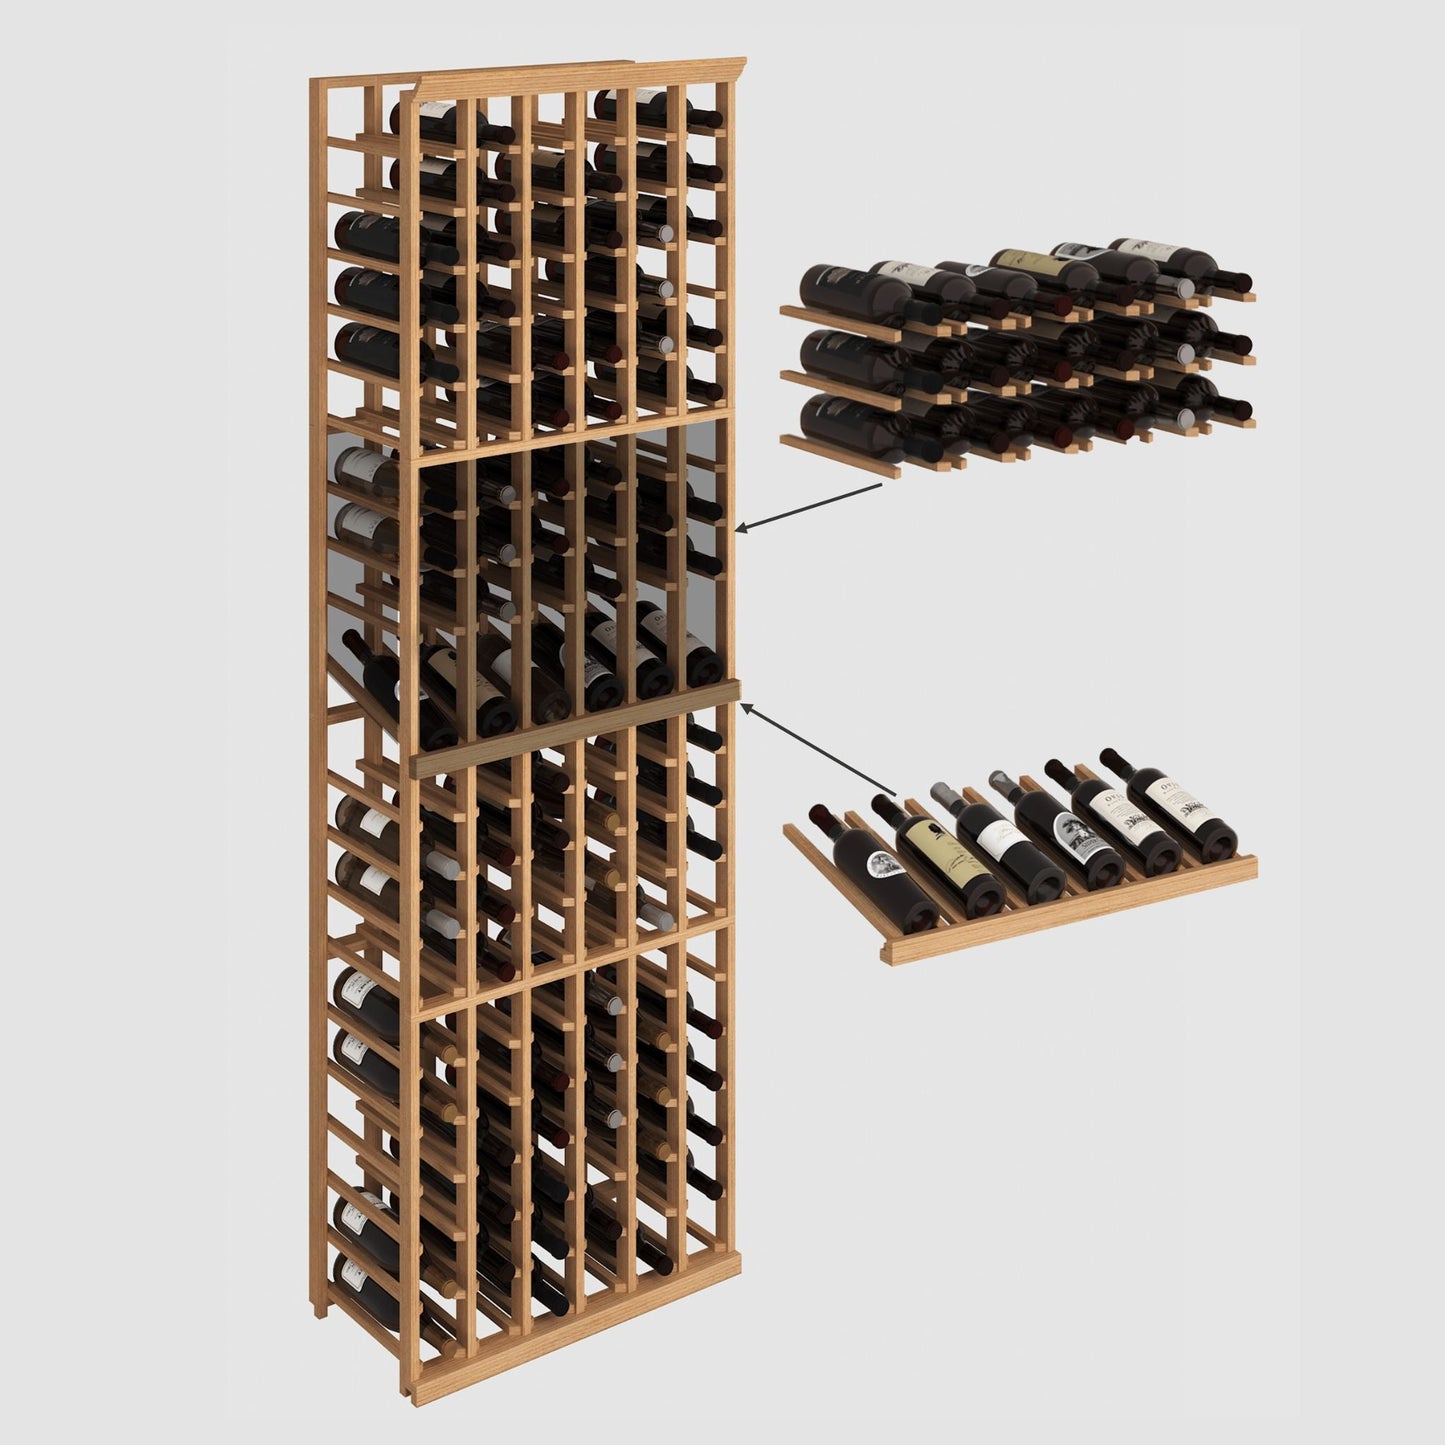 six column wine rack with bottle arrangement - Genuwine Cellars Shop